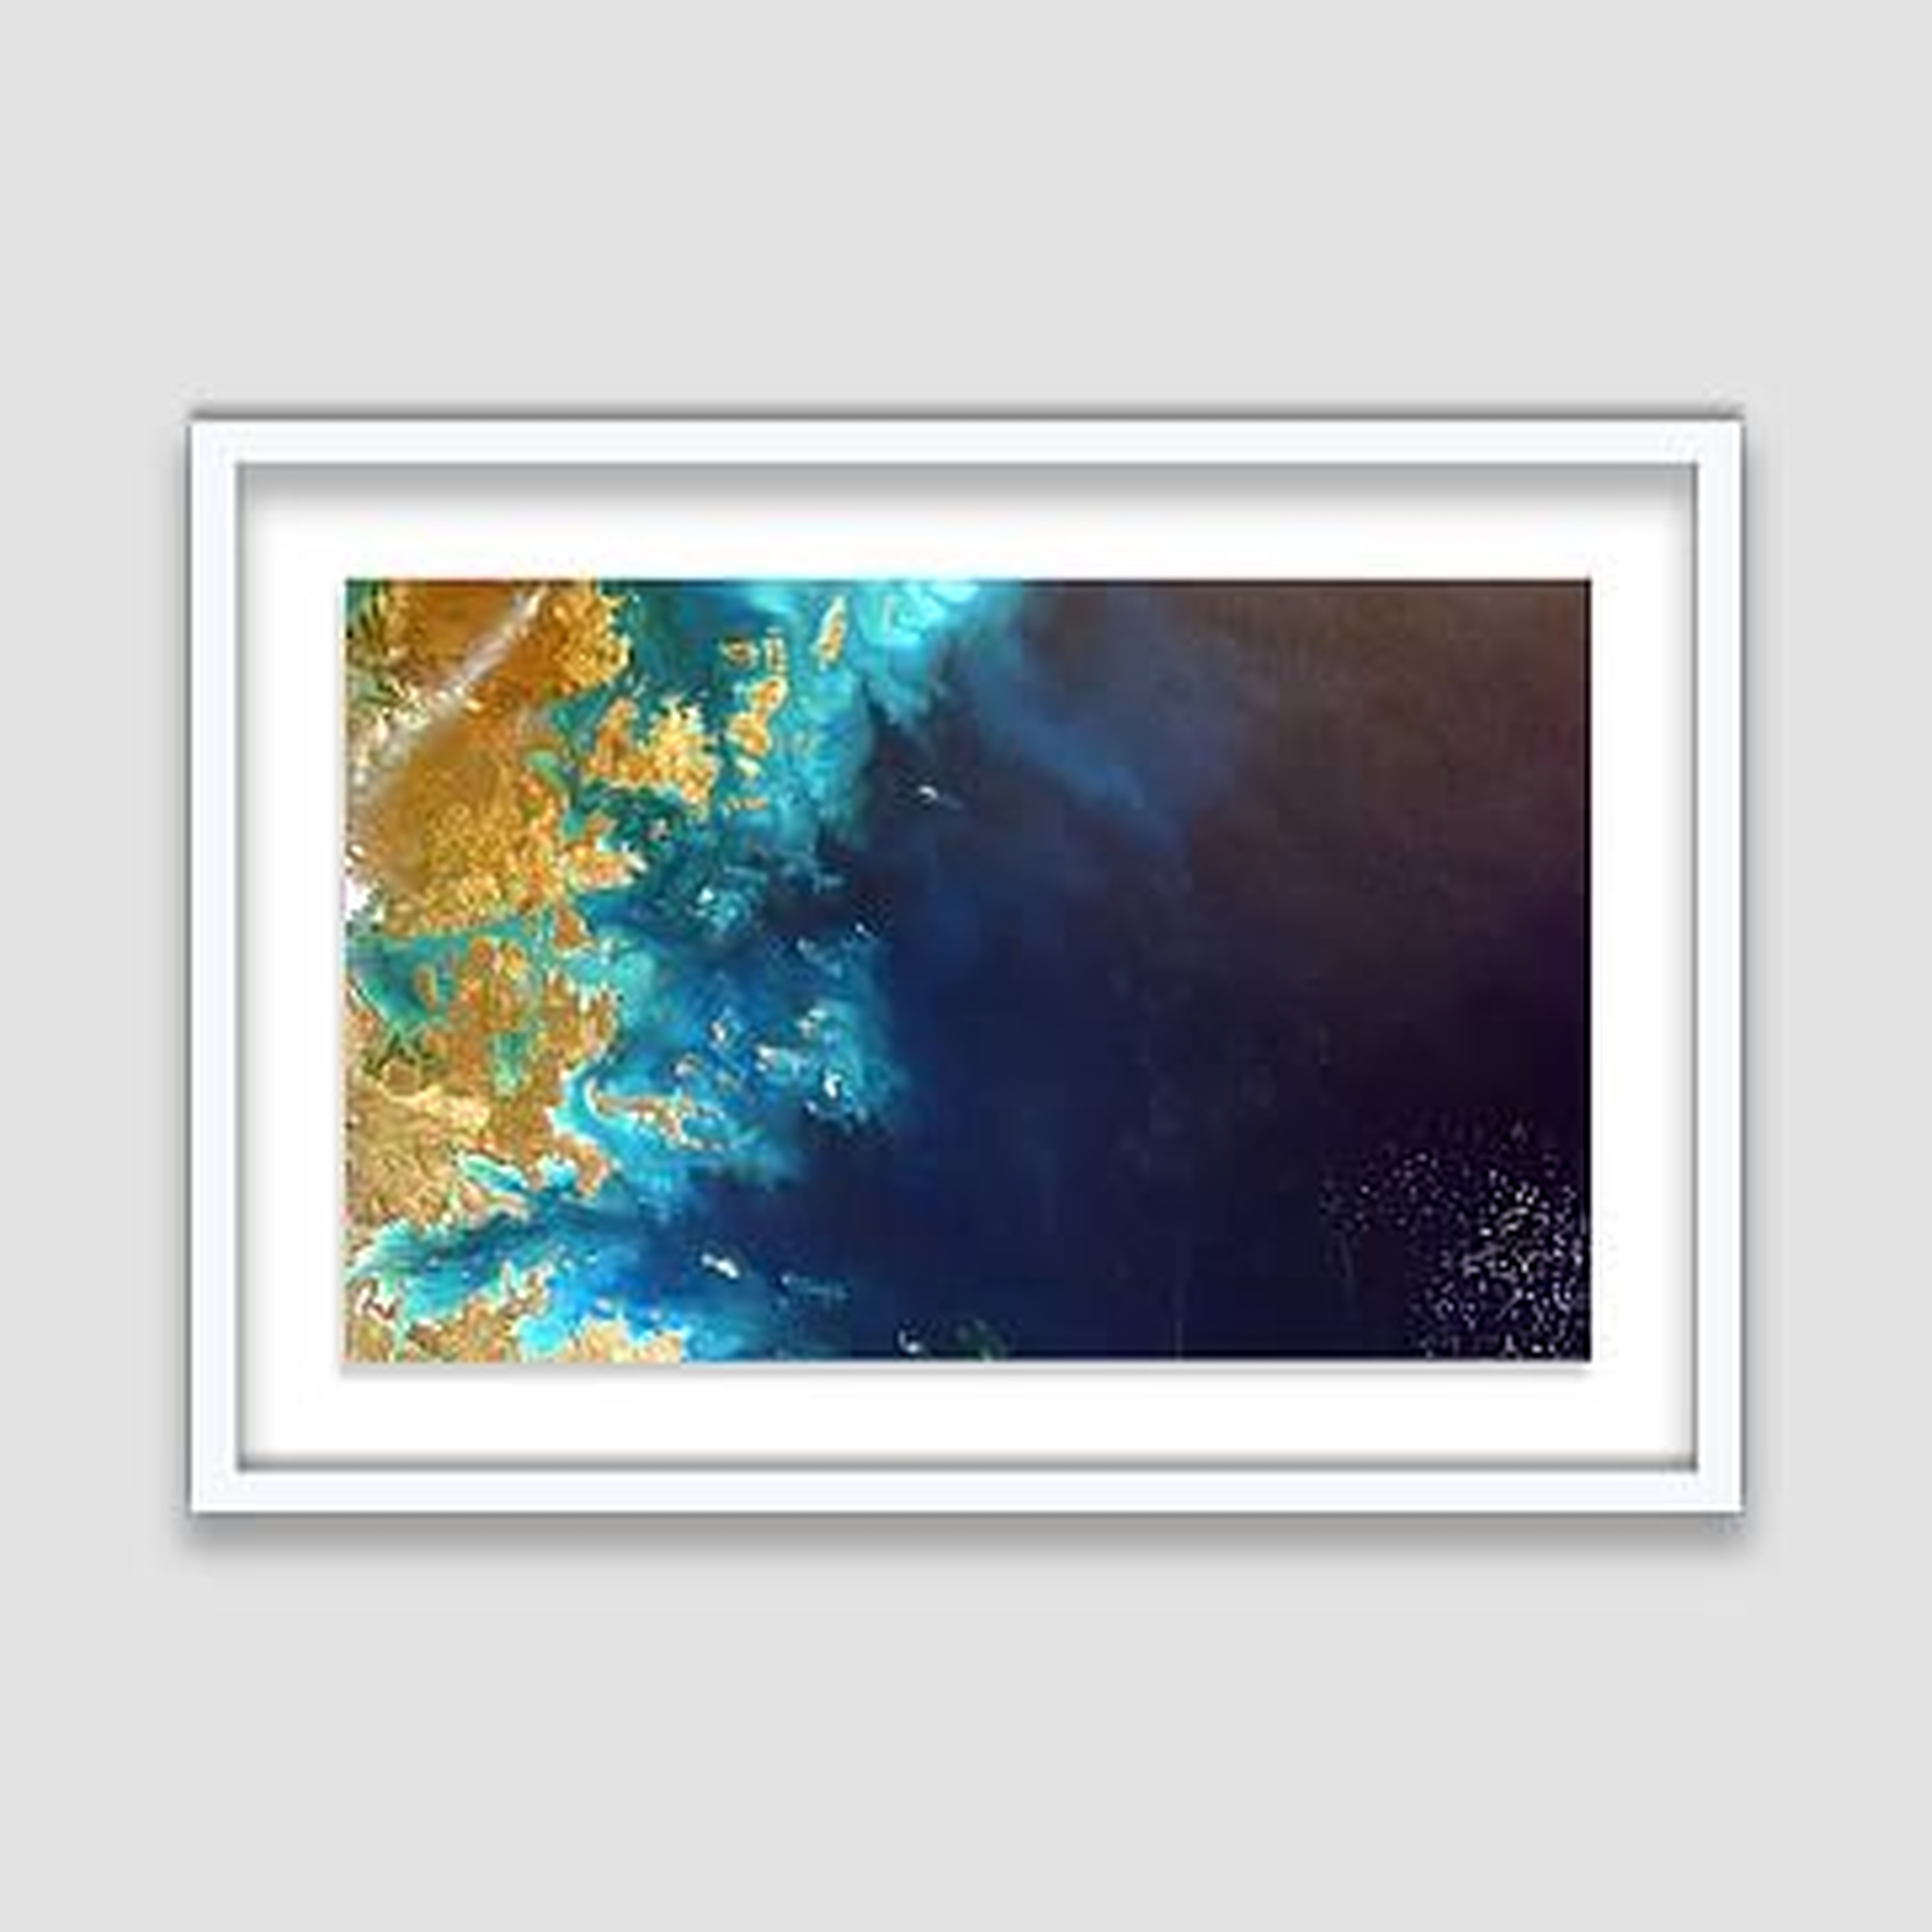 Framed Print, Abstract Sea, 46"x36" - West Elm